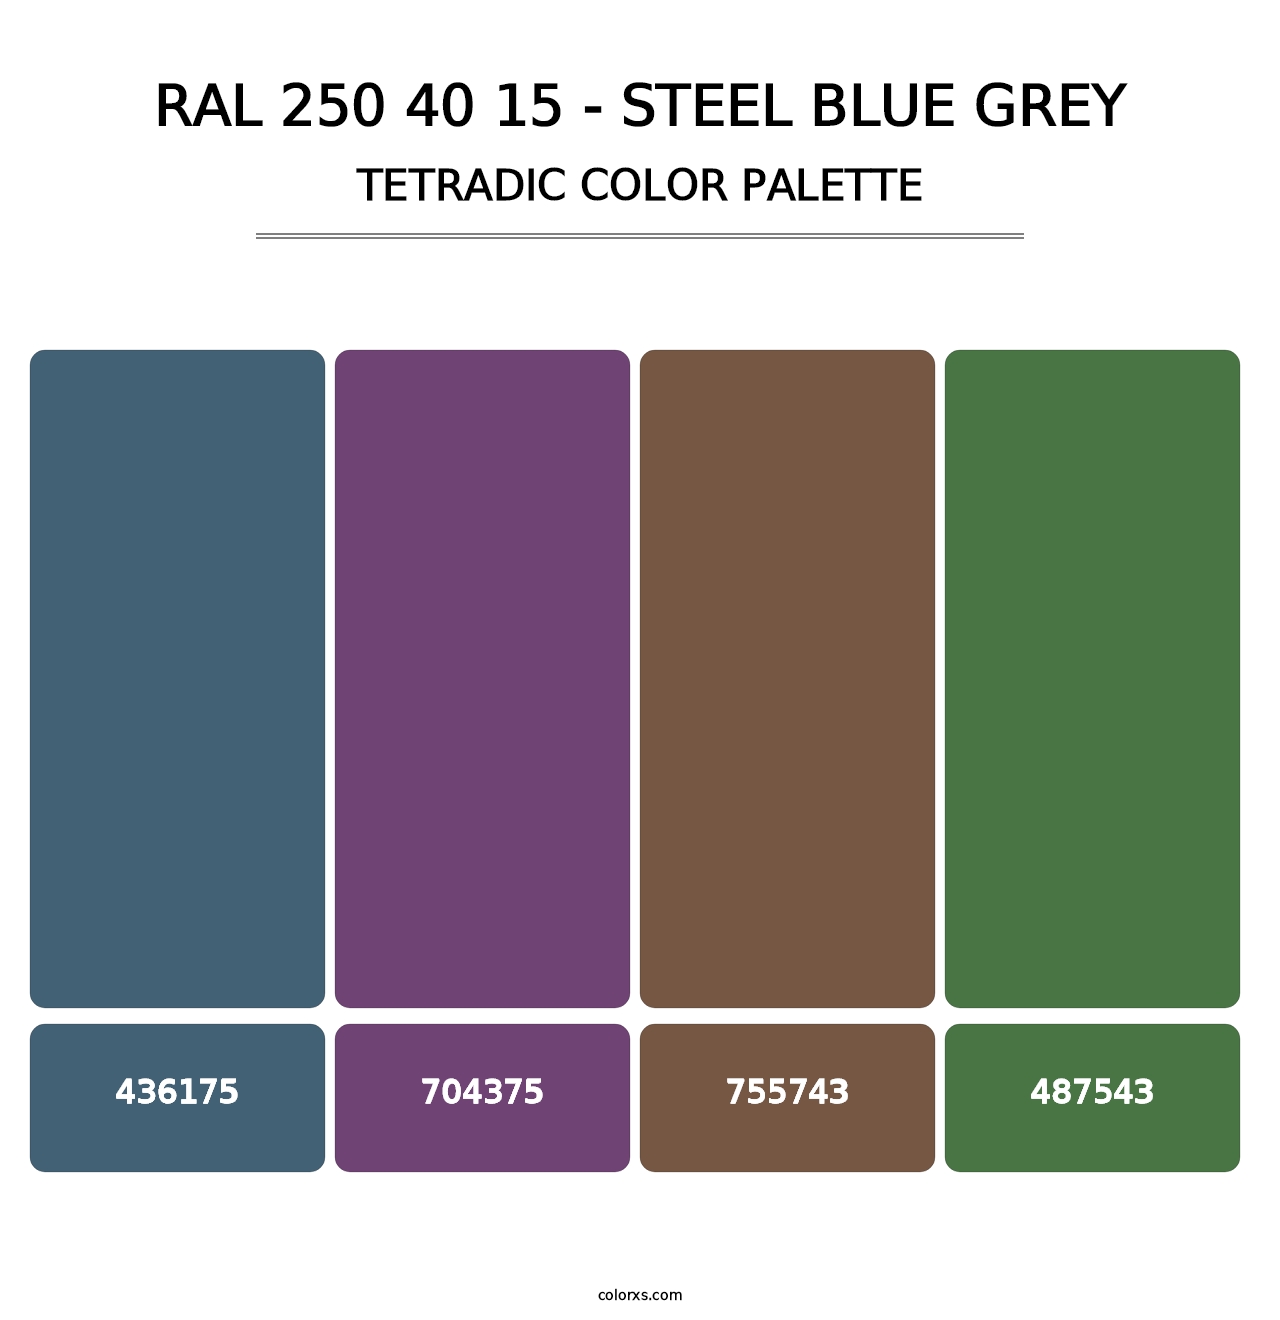 RAL 250 40 15 - Steel Blue Grey - Tetradic Color Palette